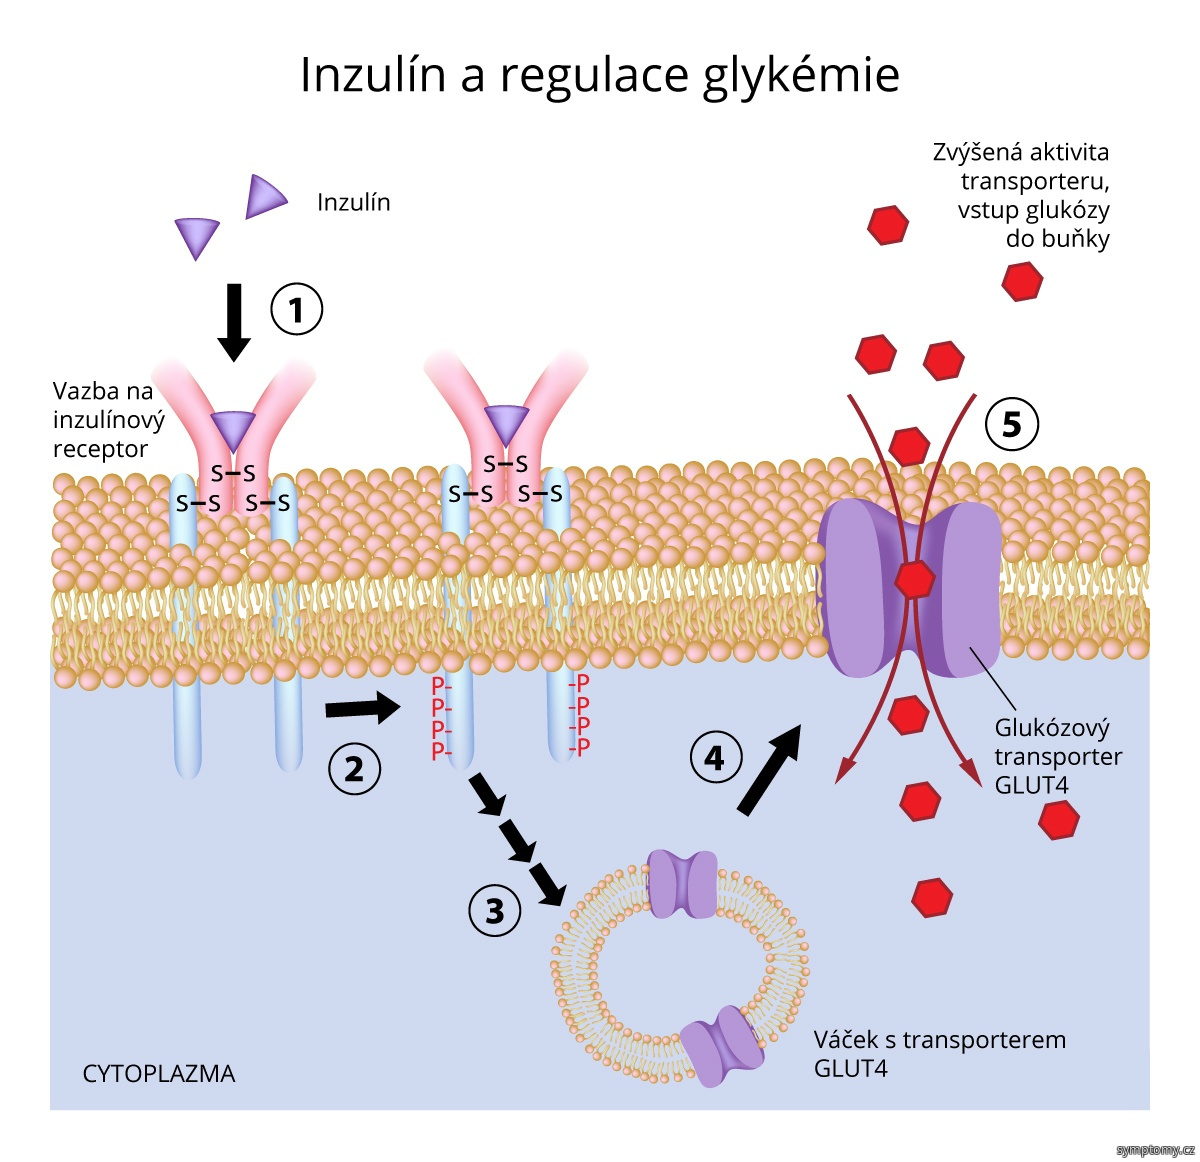 Inzulín a regulace glykémie